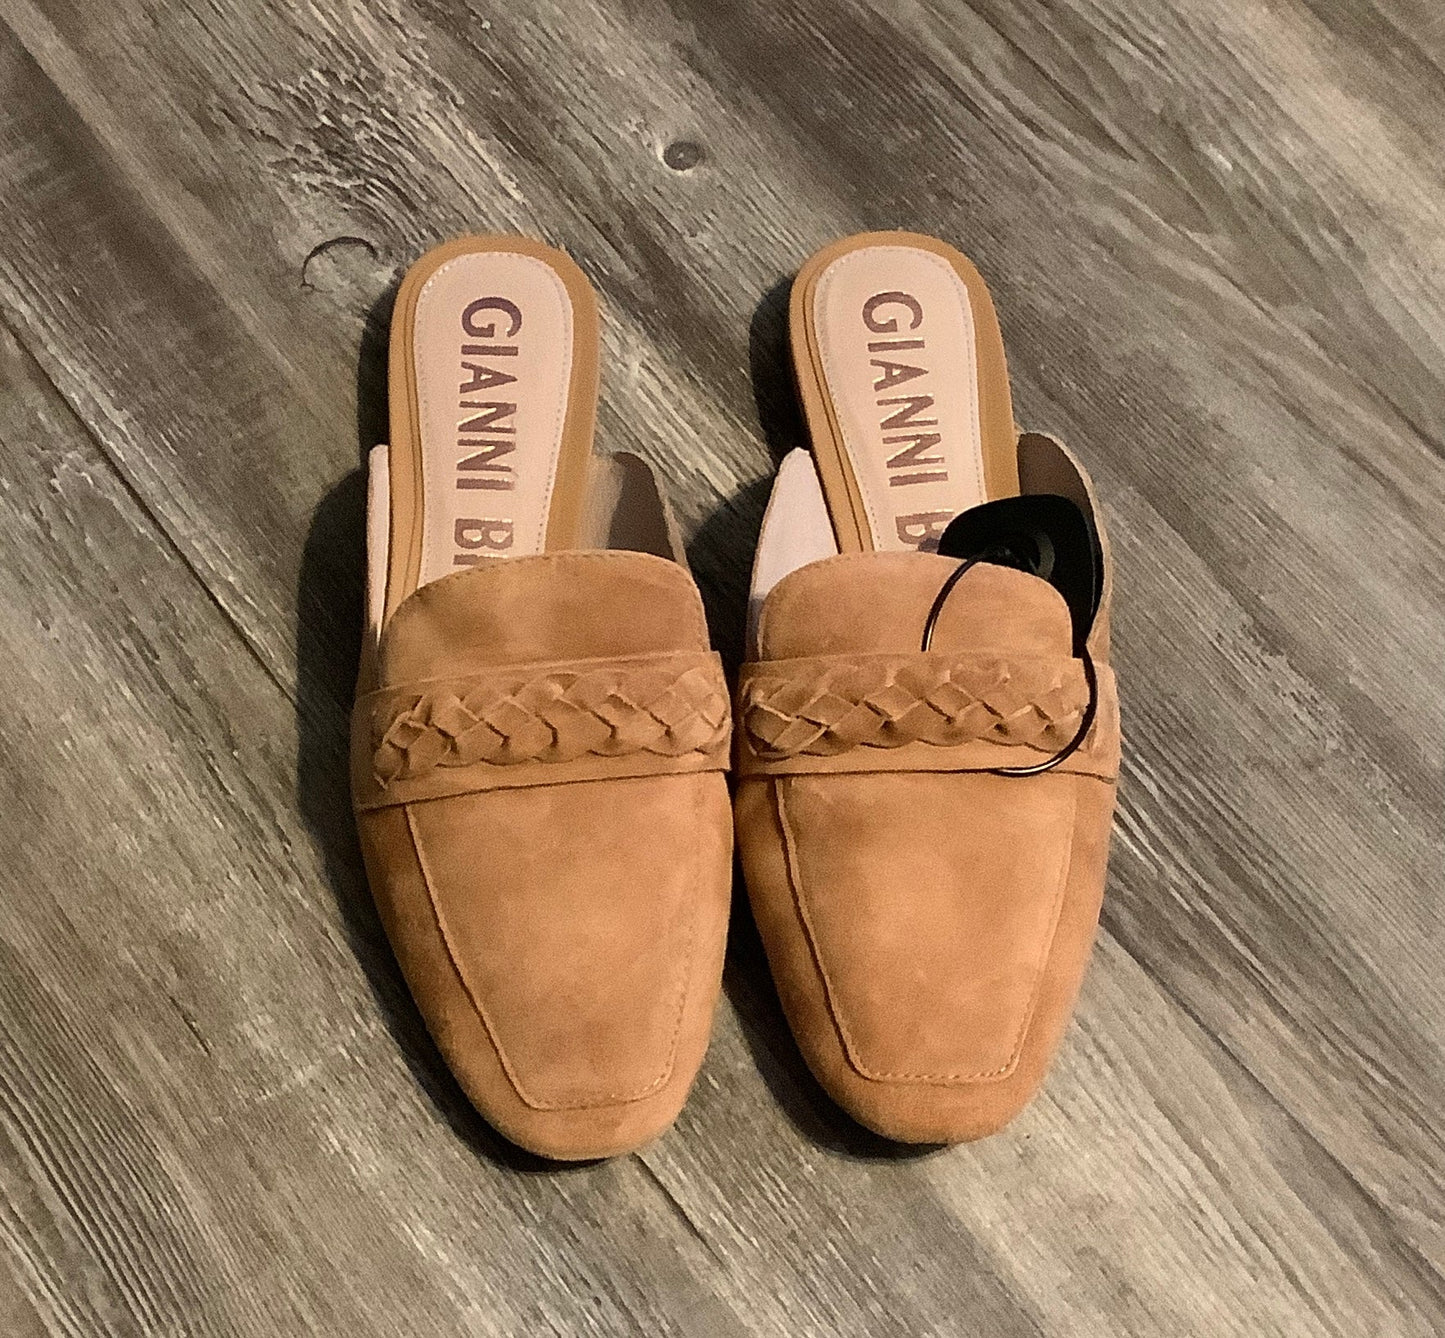 Shoes Flats By Gianni Bini  Size: 9.5